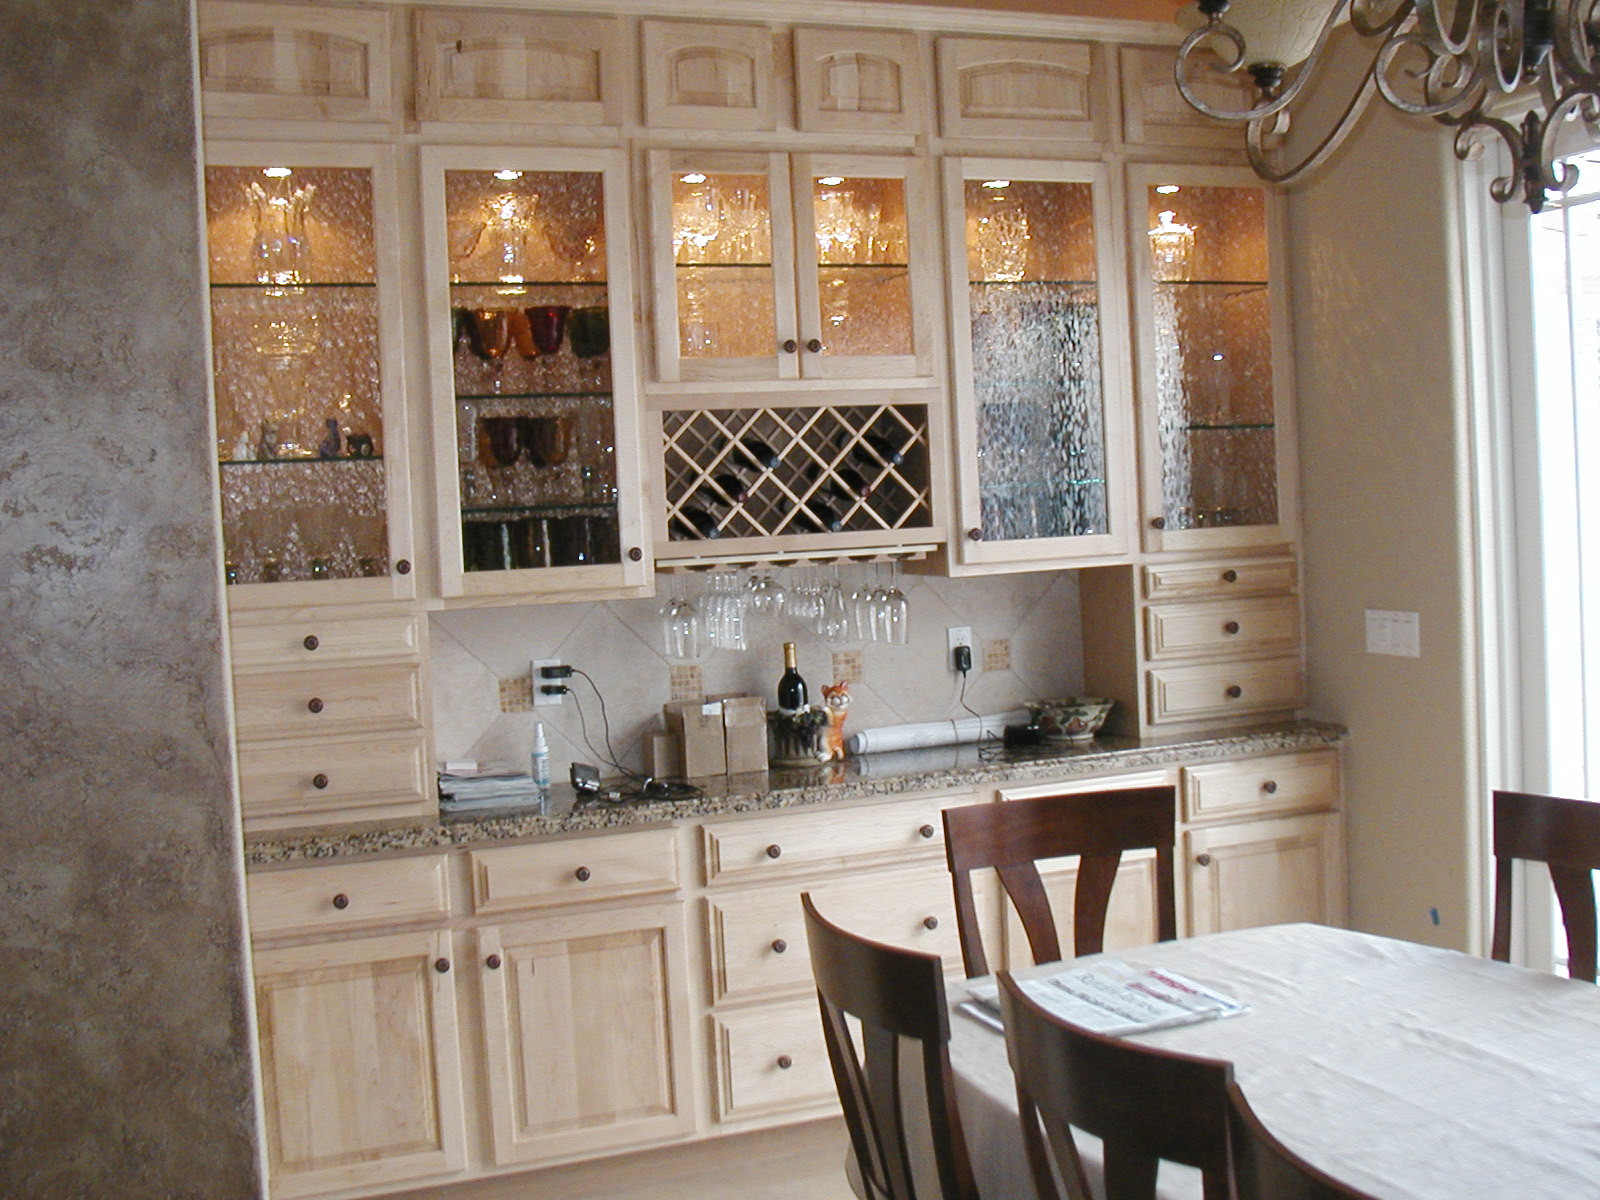 Resurfacing Kitchen Cabinet Doors
 Kitchen Best Cabinet Refacing Supplies To Finish Your